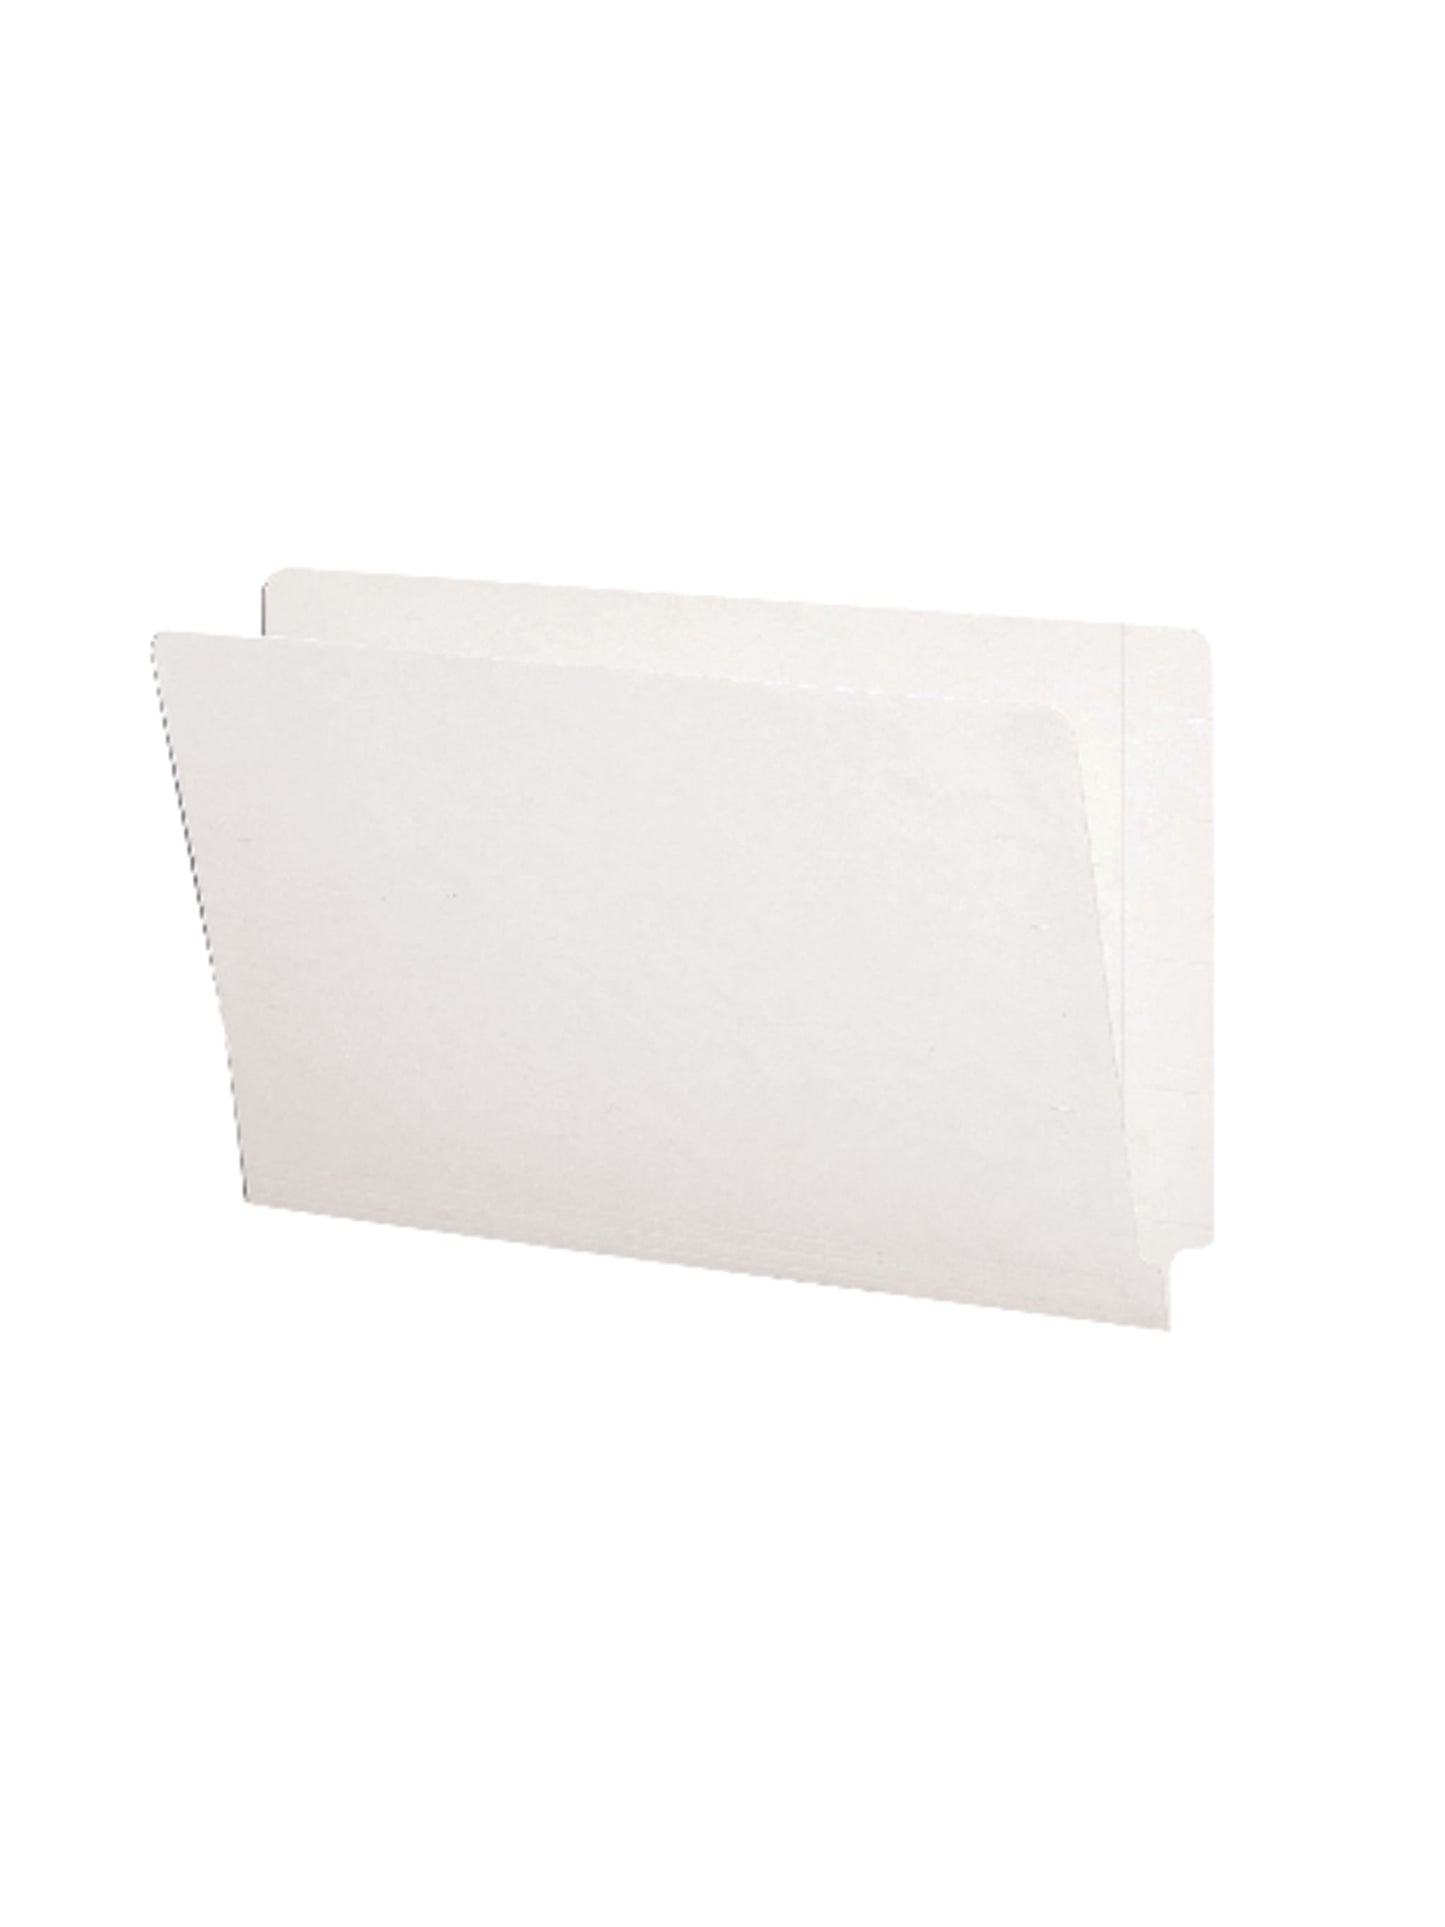 Standard End Tab File Folders, Straight-Cut Tab, Ivory Color, Legal Size, Set of 100, 086486245562